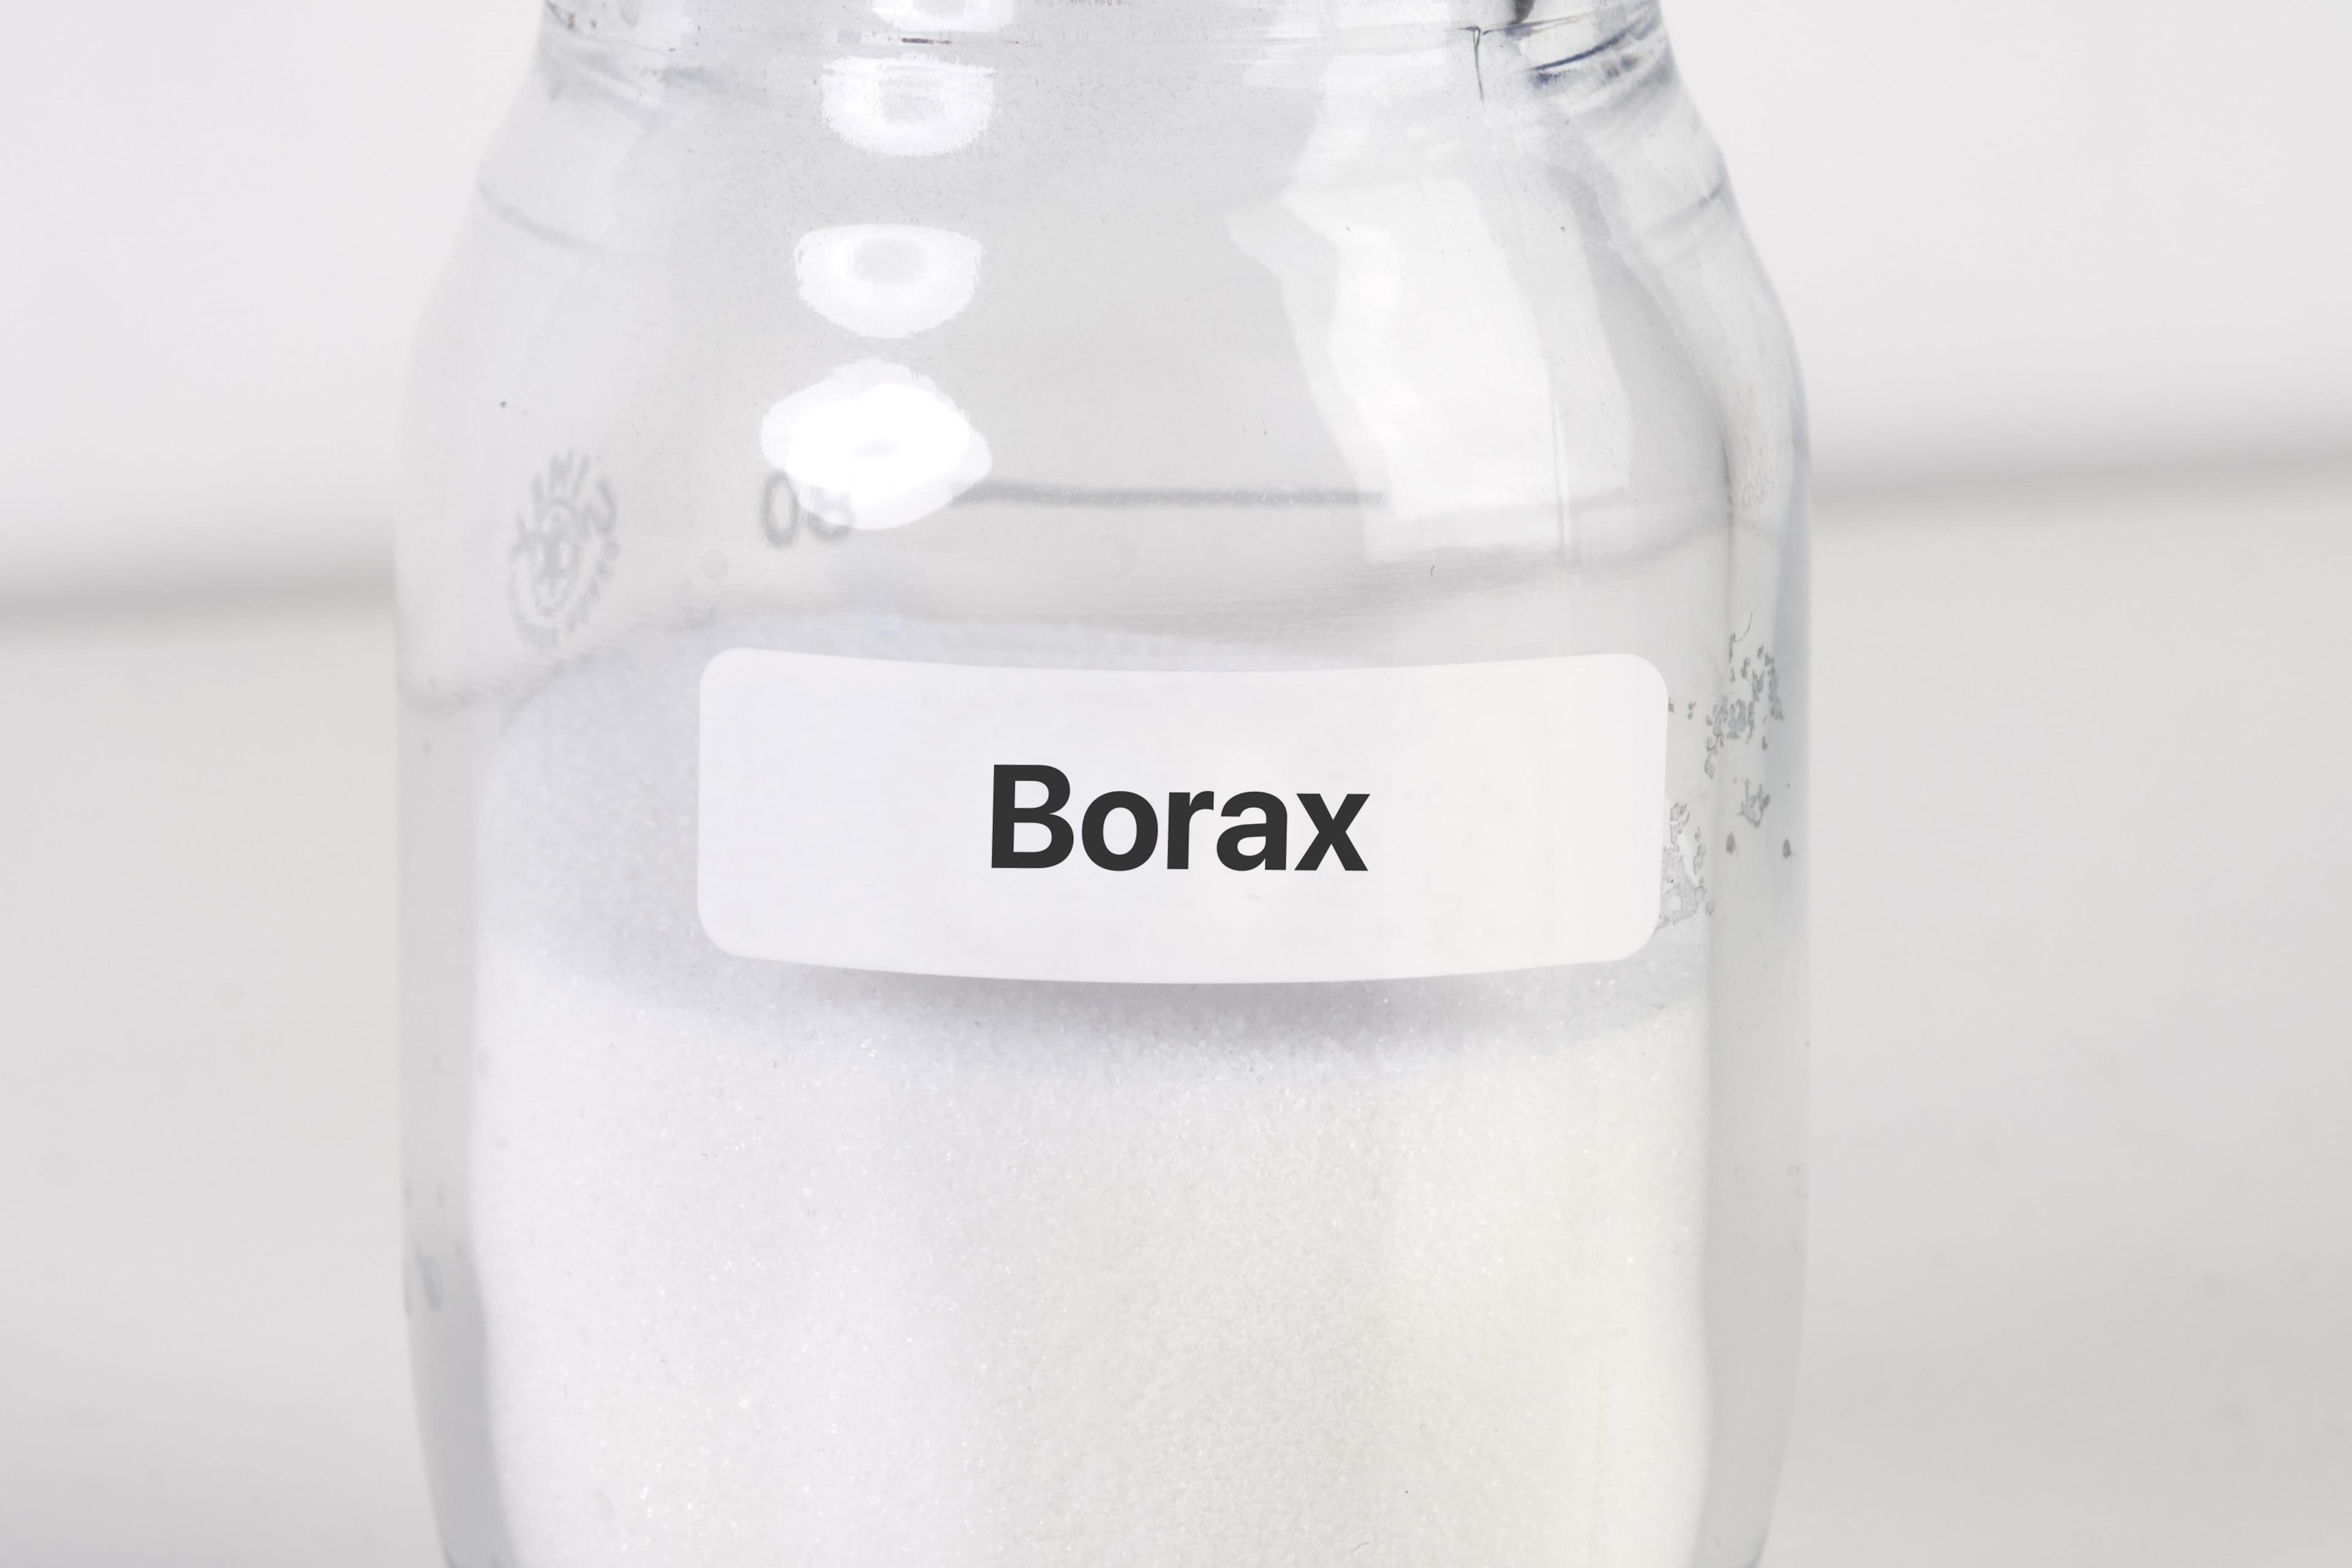 the chemical borax